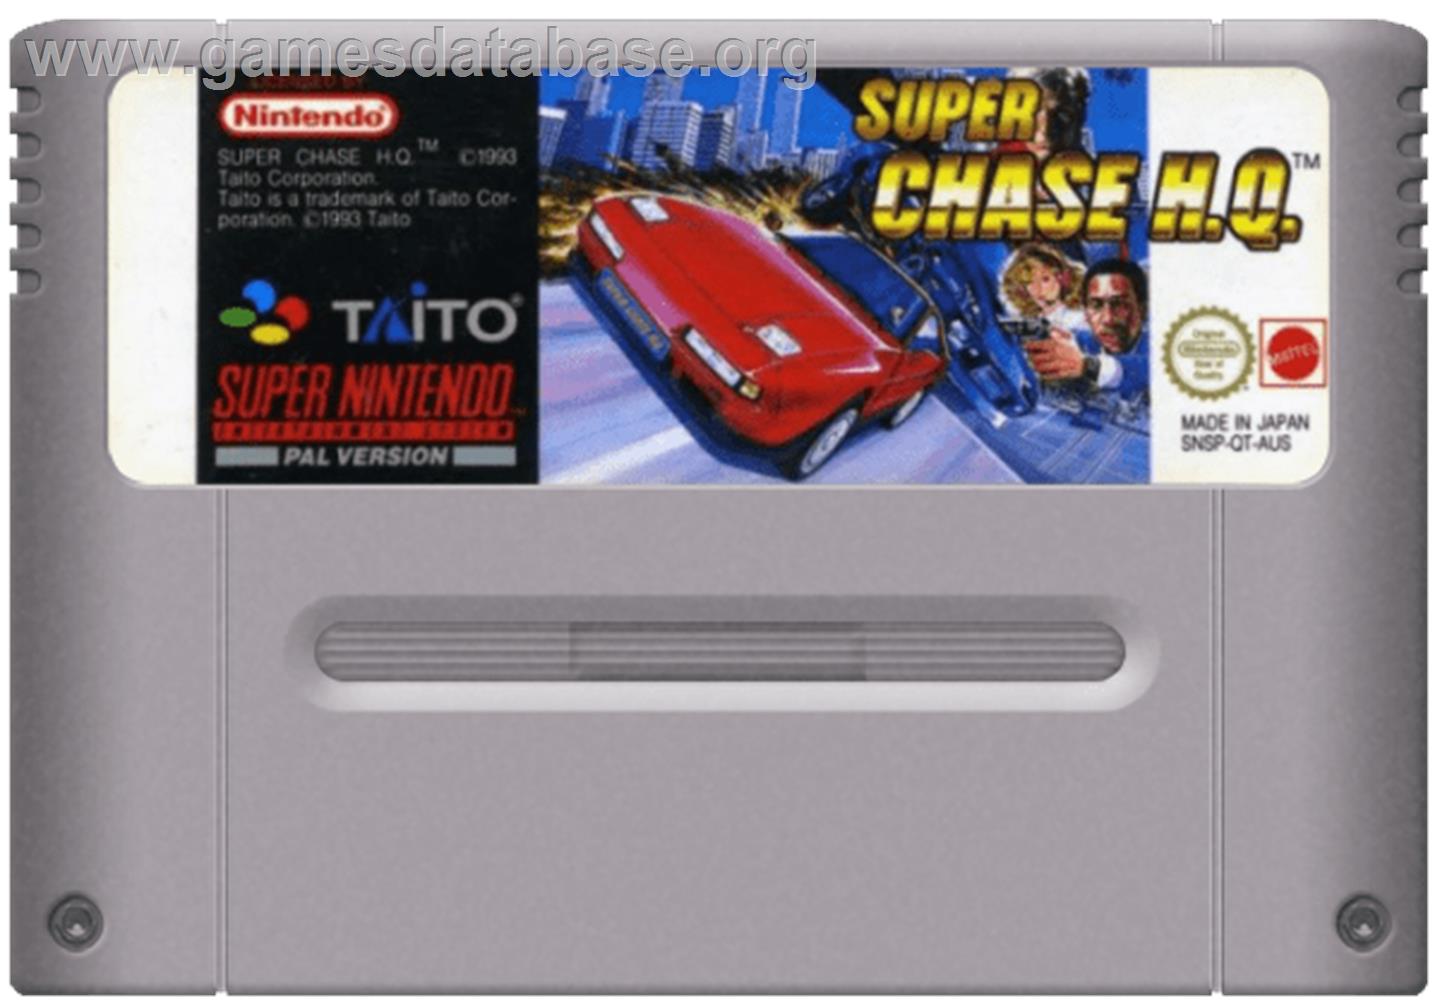 Super Chase H.Q. - Nintendo SNES - Artwork - Cartridge